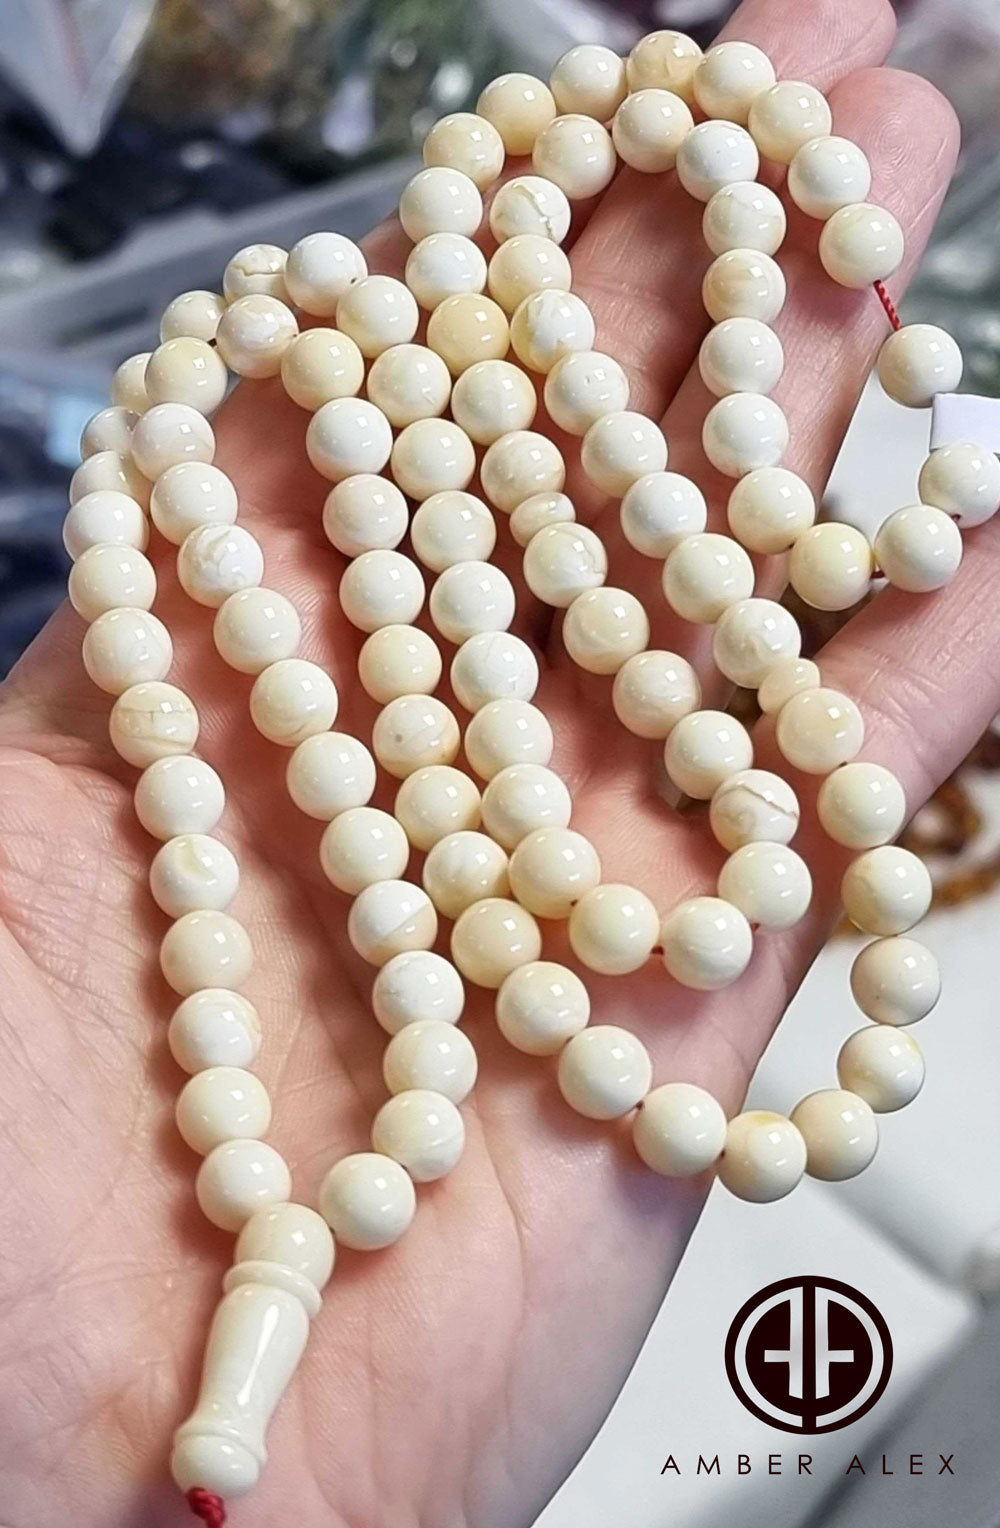 White With Yellow Amber Round Shape 7.5 mm Islamic Rosary Beads